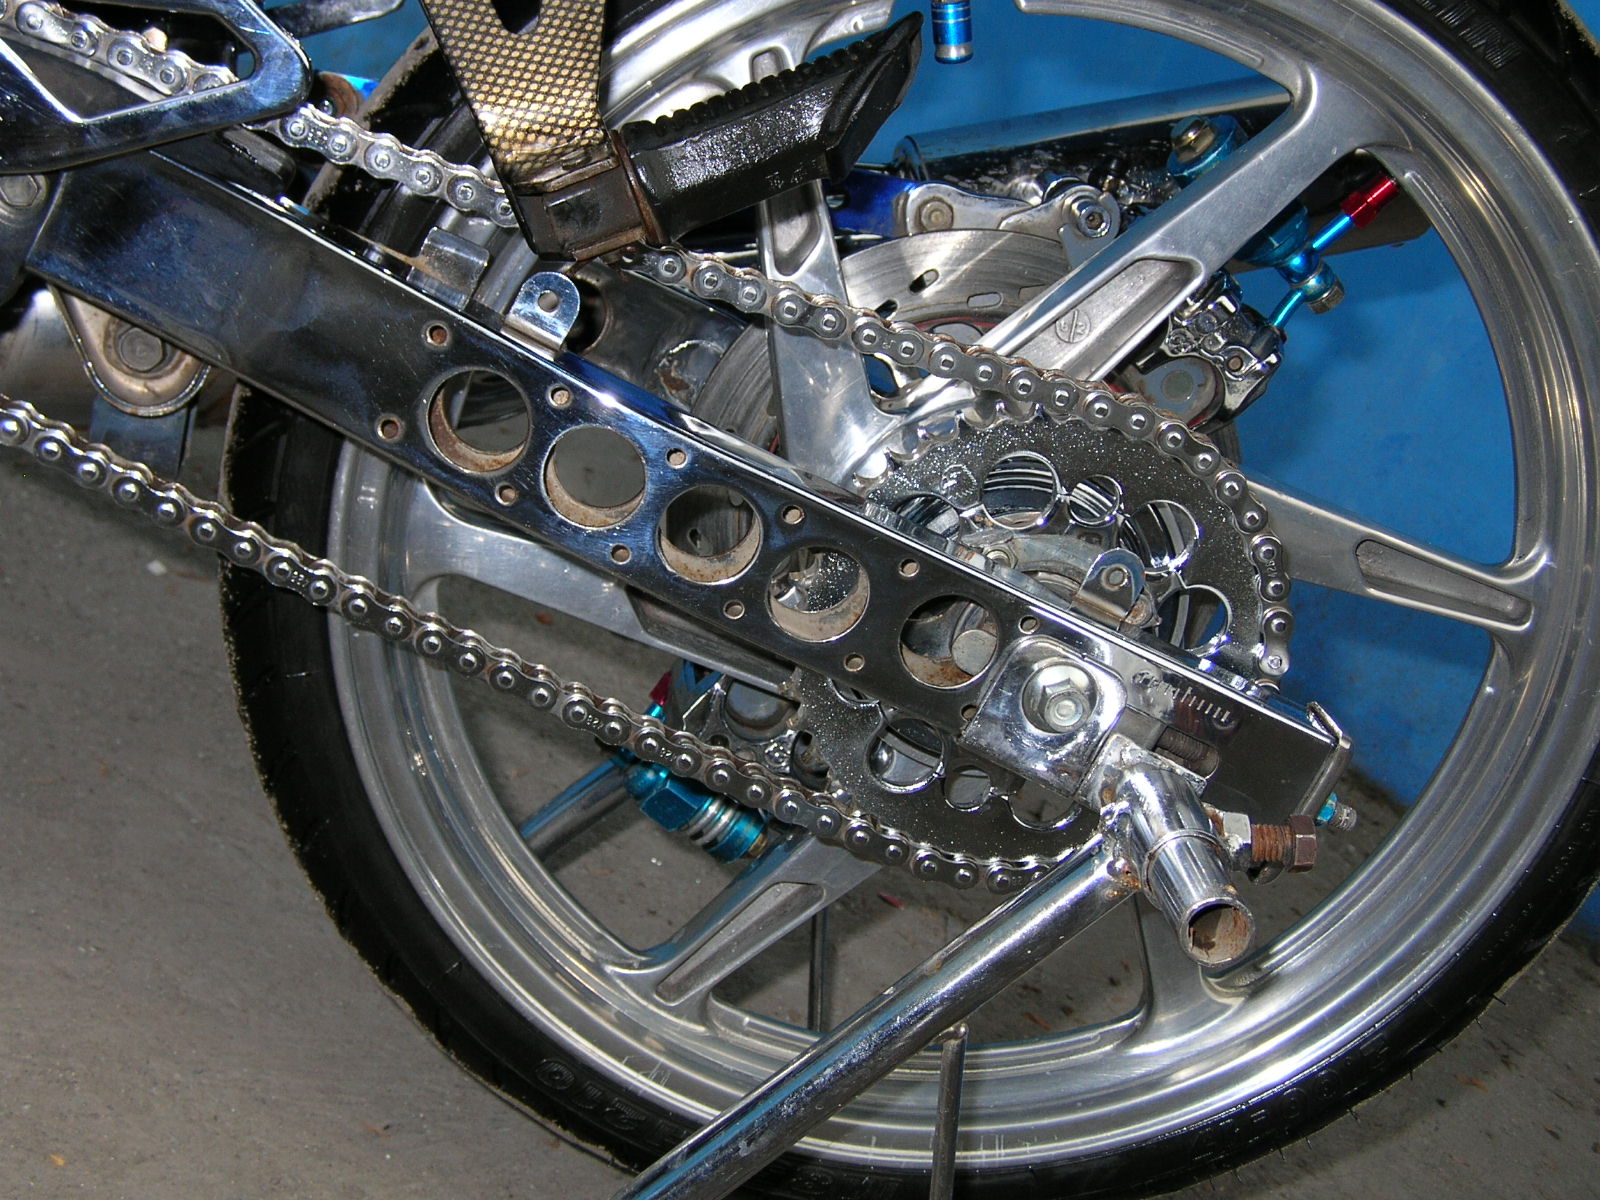 Latest Motorcycle Design Modif Suzuki Satria Blue Color